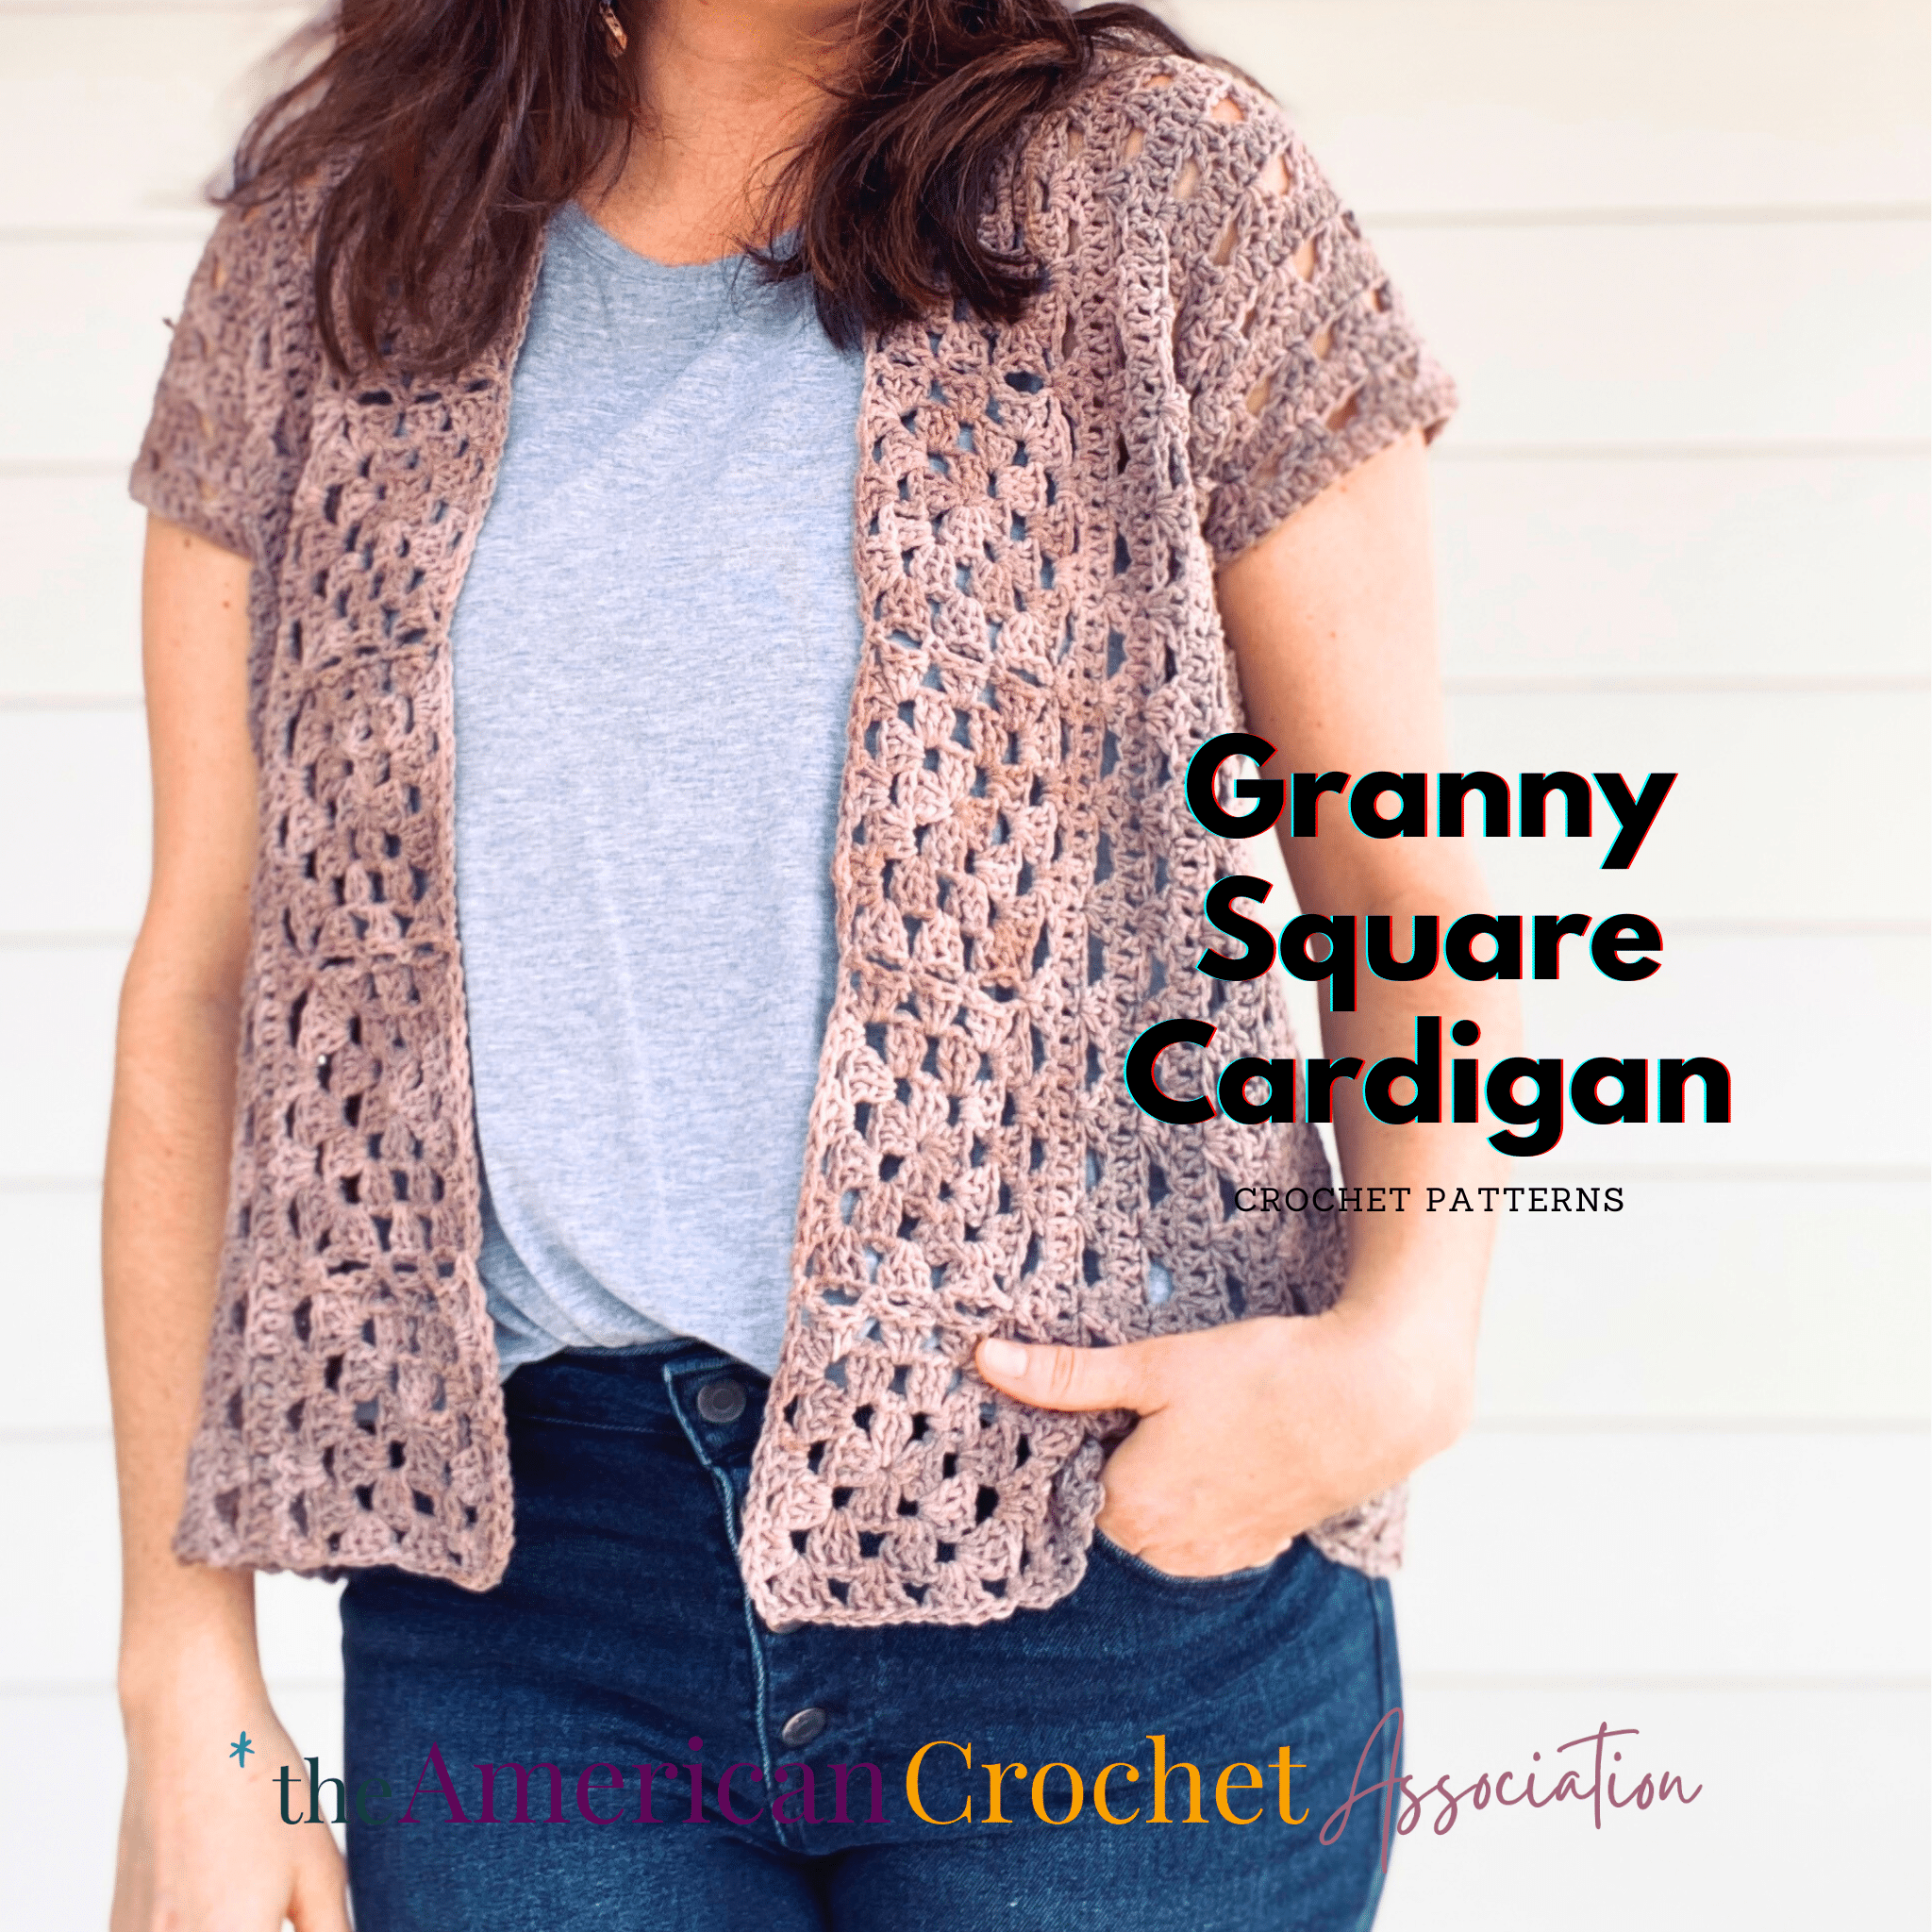 Granny Square Purple Cardigan open front Crochet Pattern - American Crochet Association